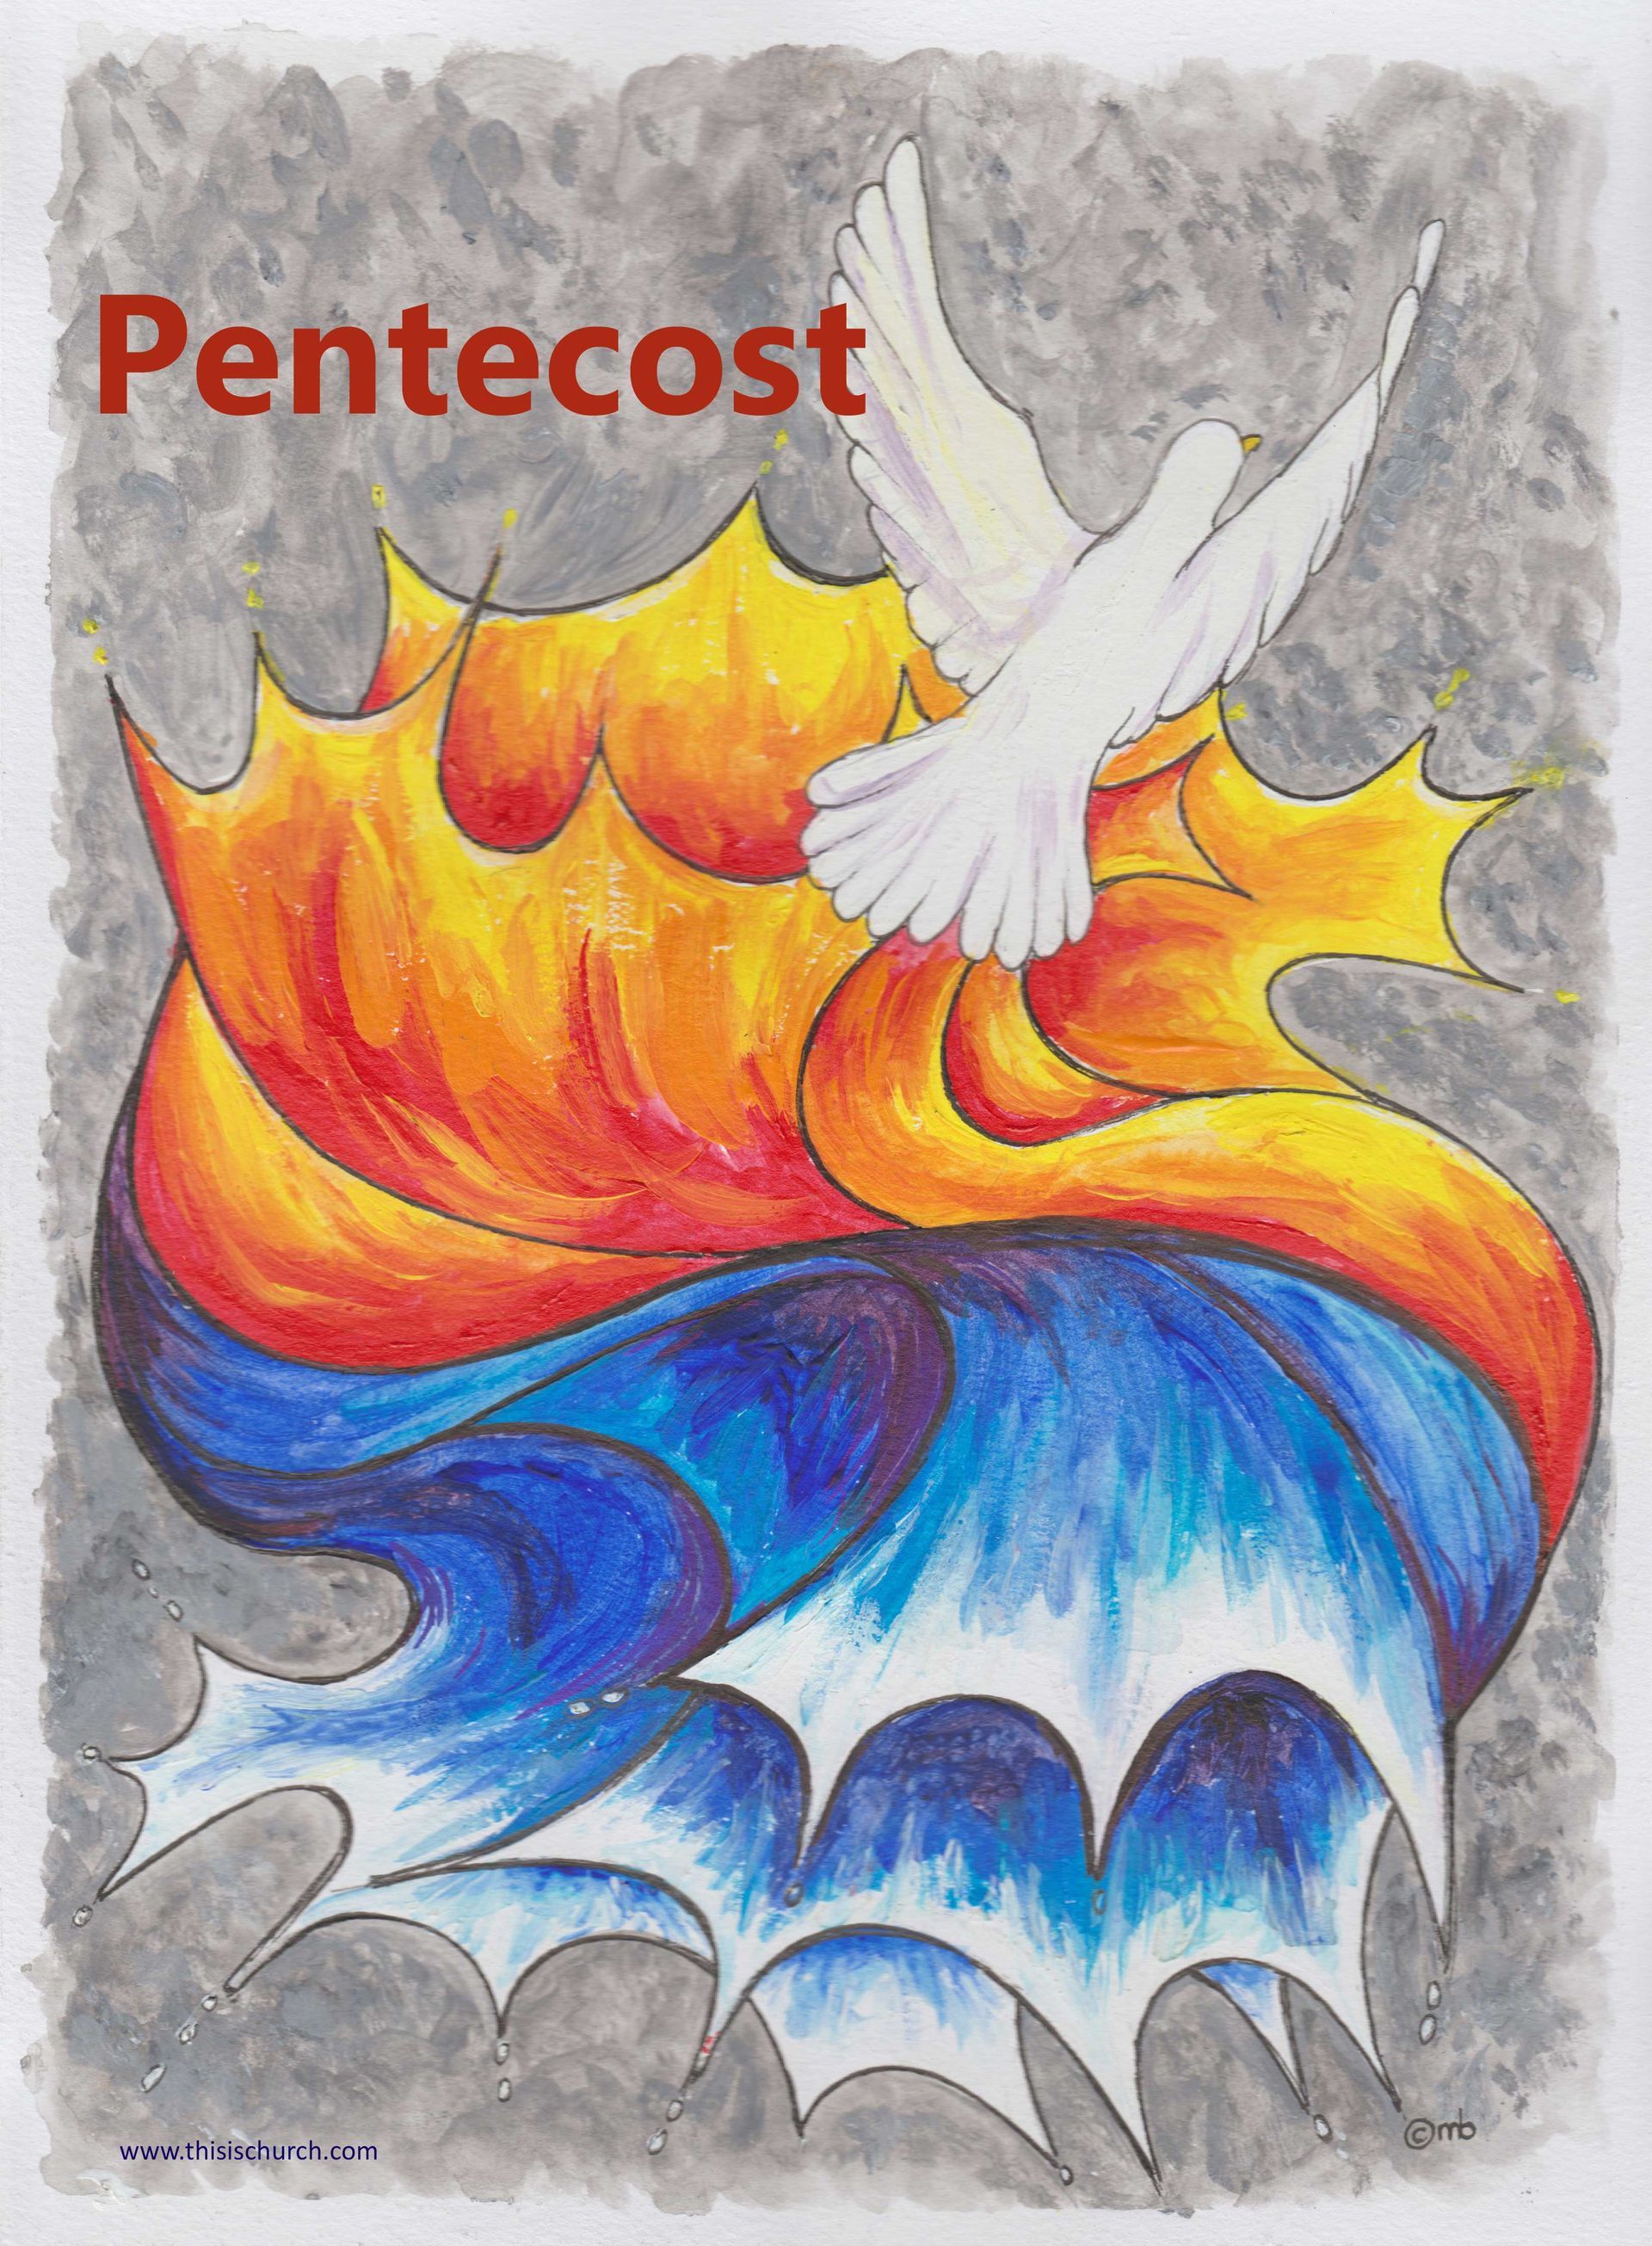 Pentecost picture